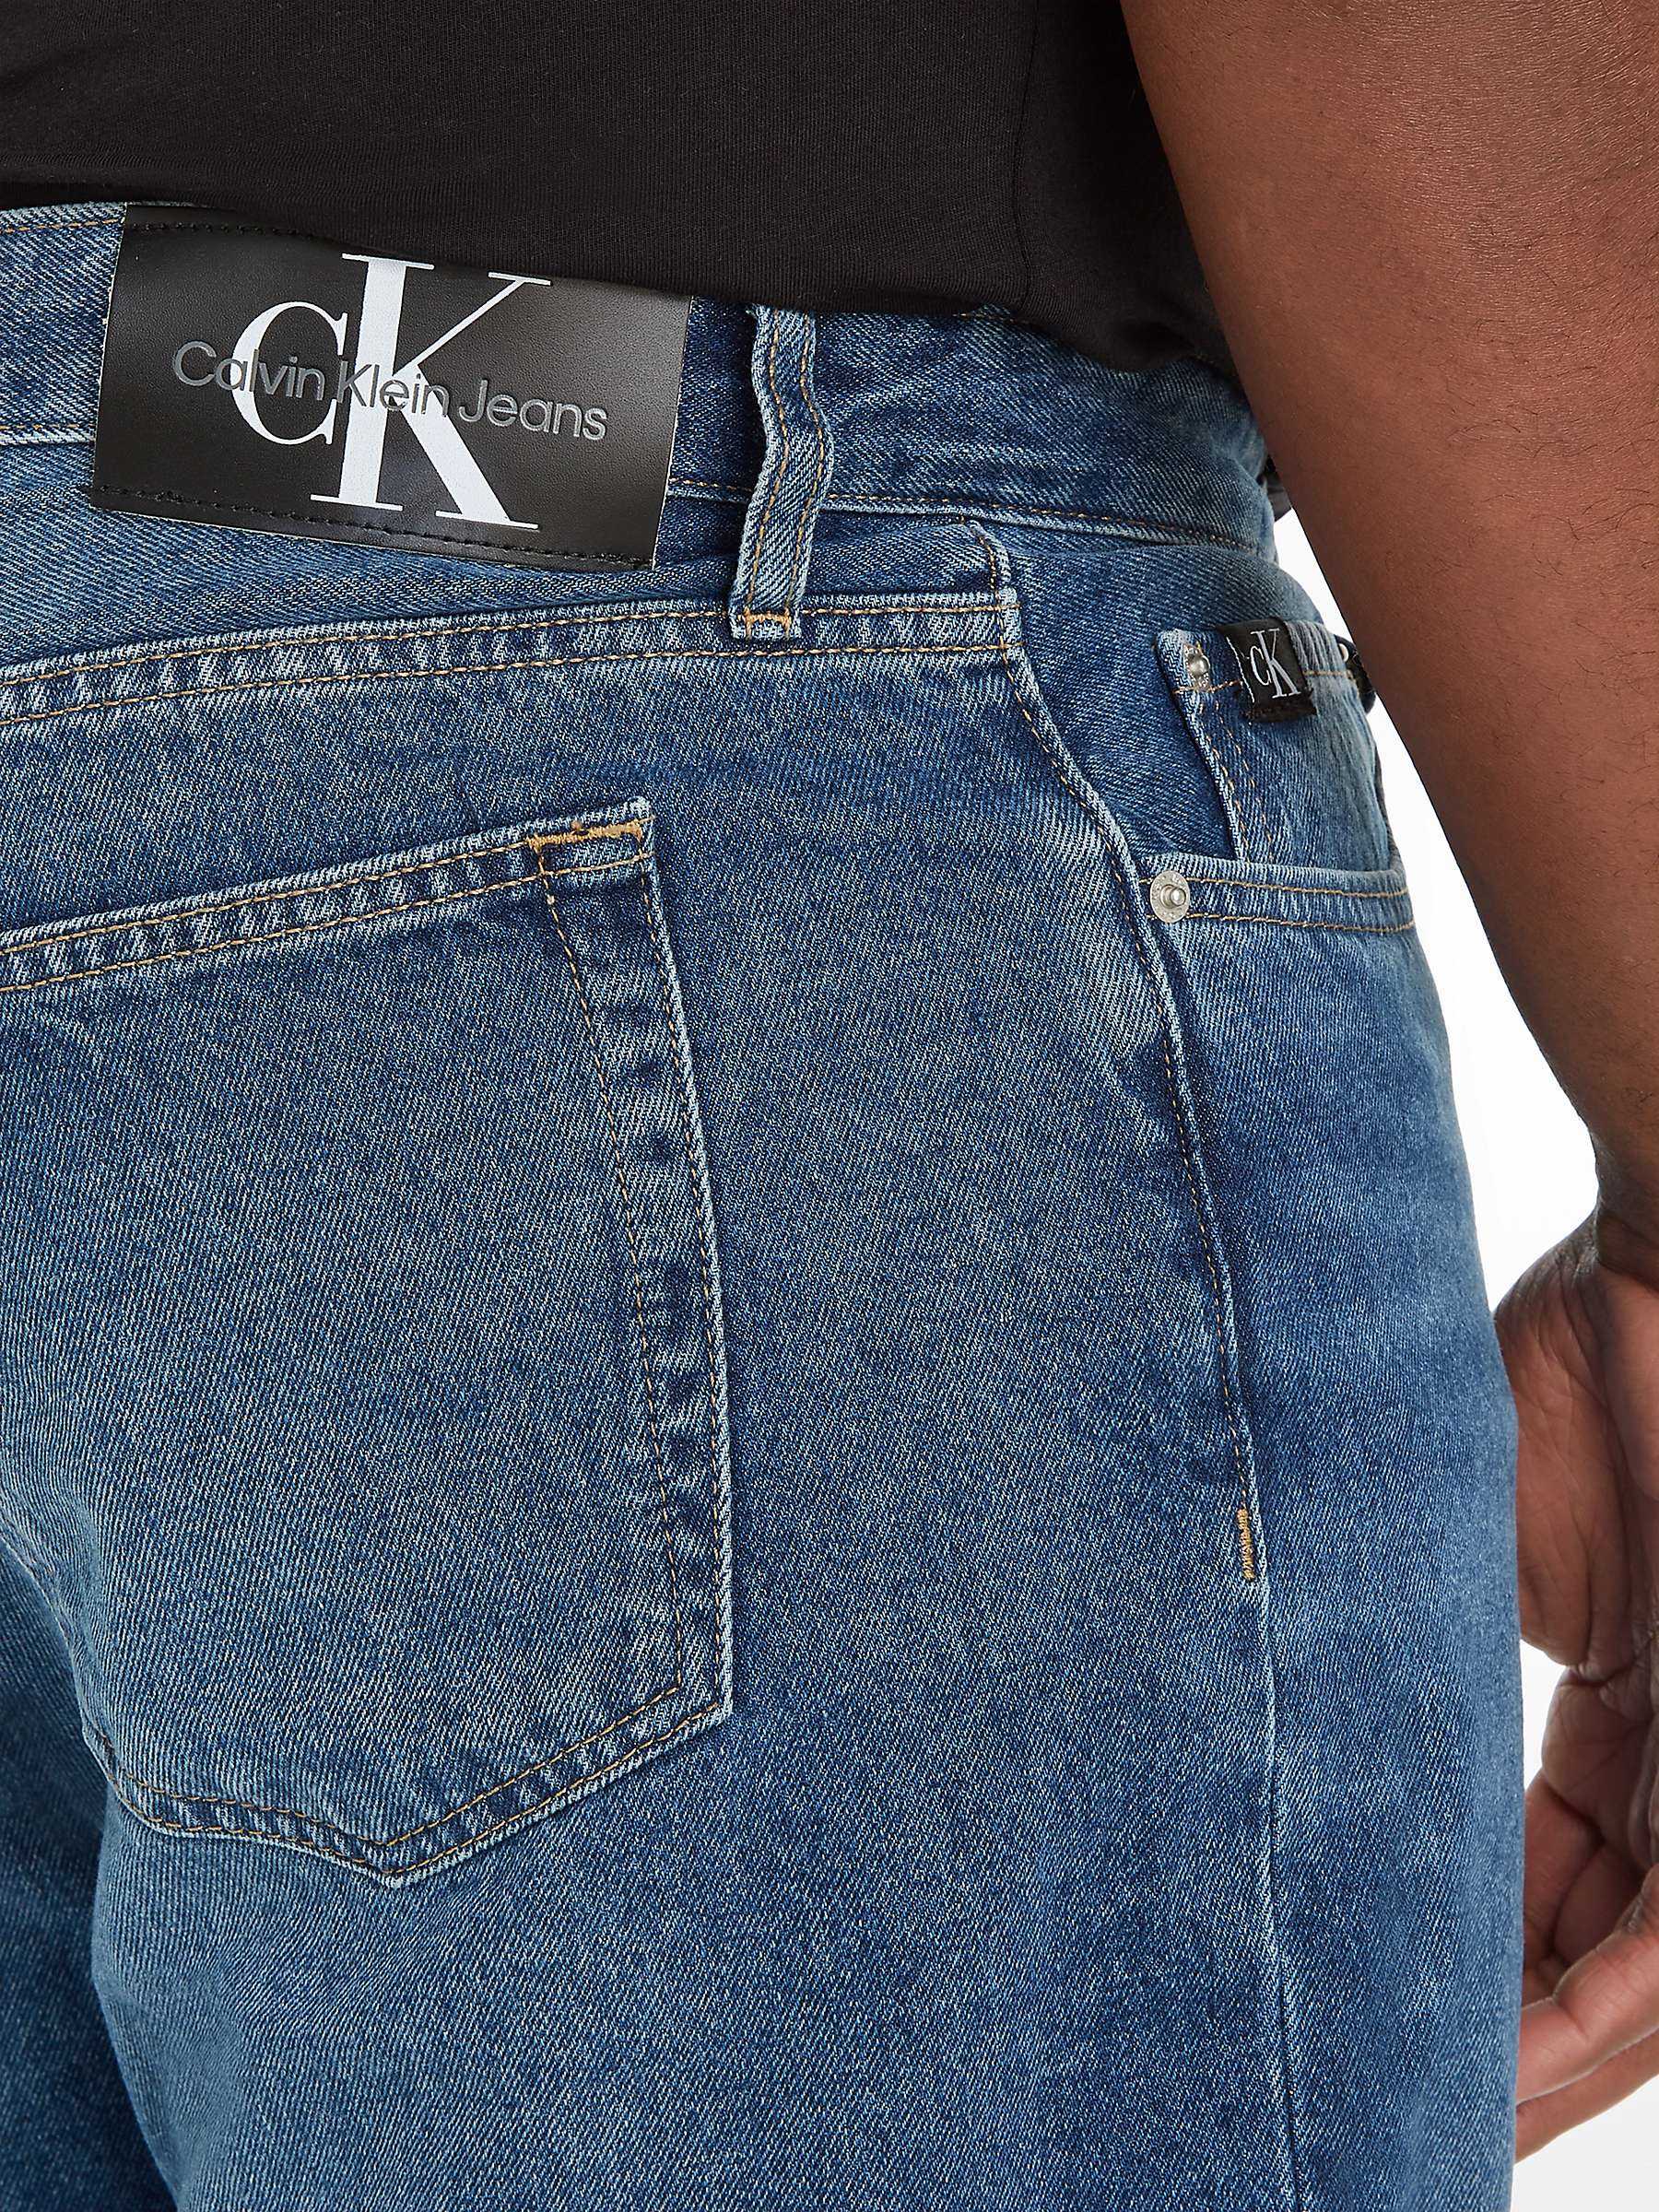 Buy Calvin Klein Jeans Slim Tapered Jeans, Denim Dark Online at johnlewis.com